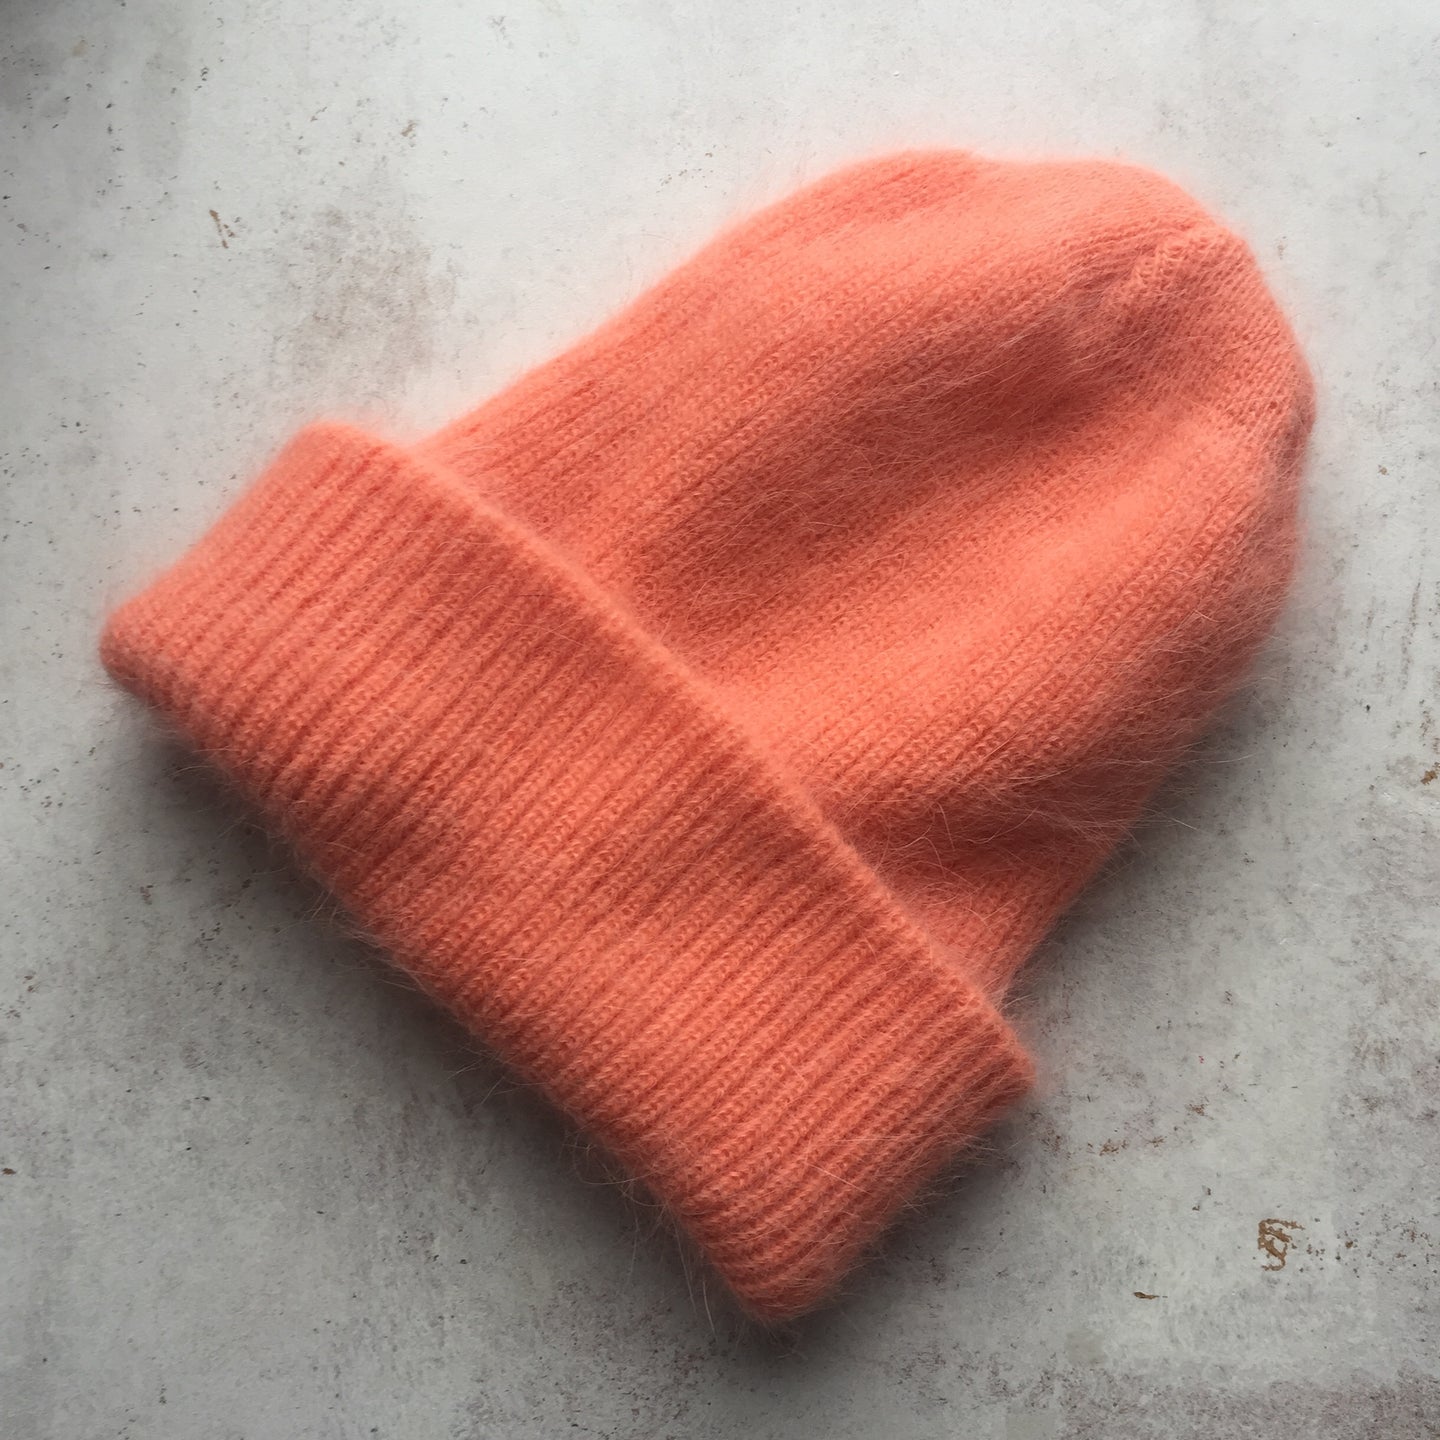 Fluffy Angora knit hat-Coral pink-, Hat, WondrousTheatre, WondrousTheatre,